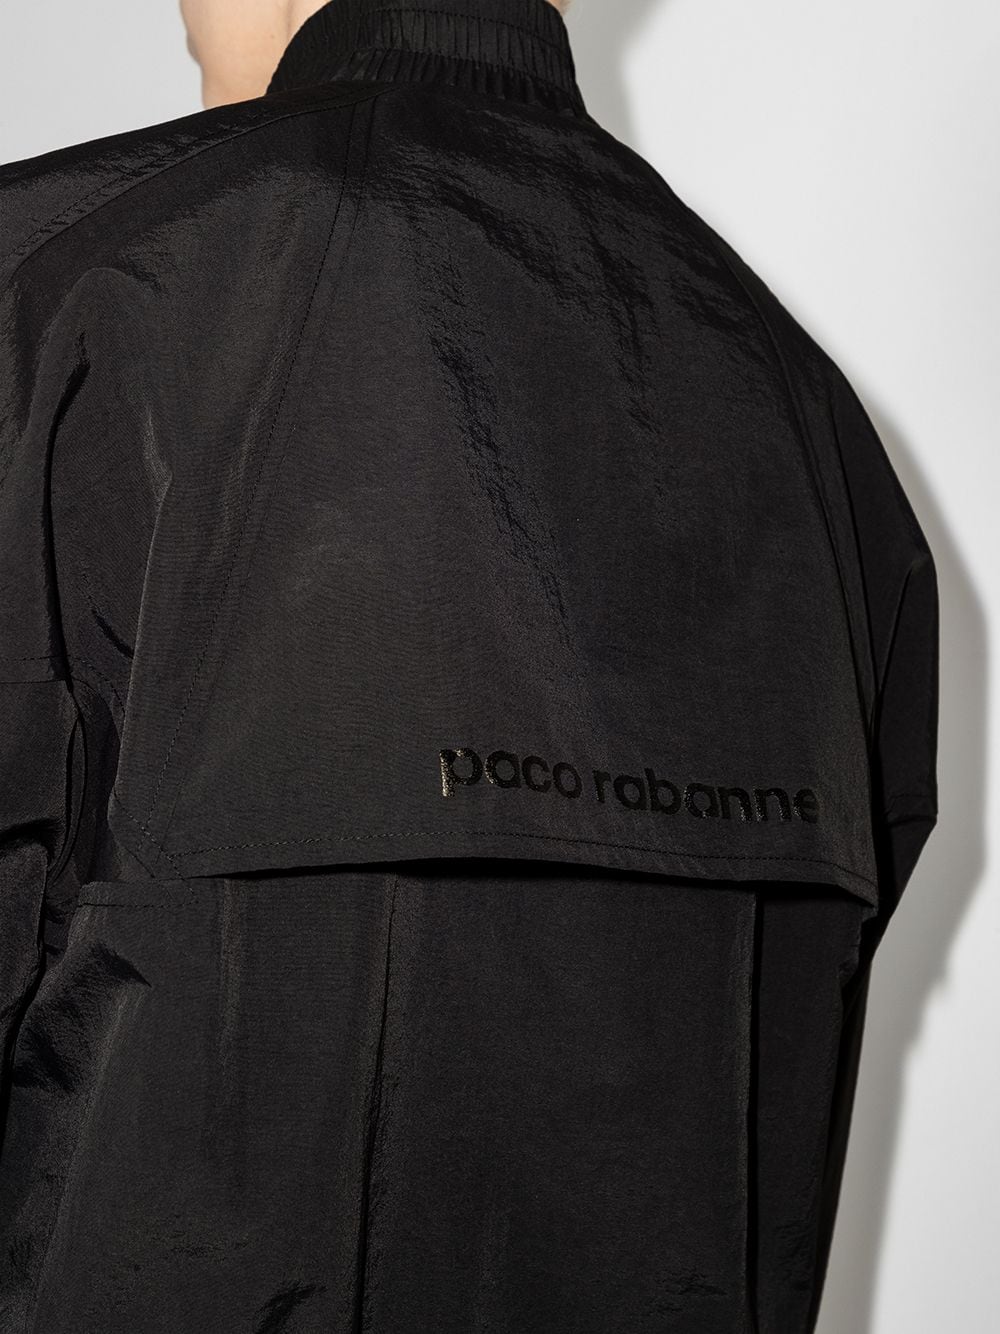 фото Paco rabanne легкая куртка с логотипом